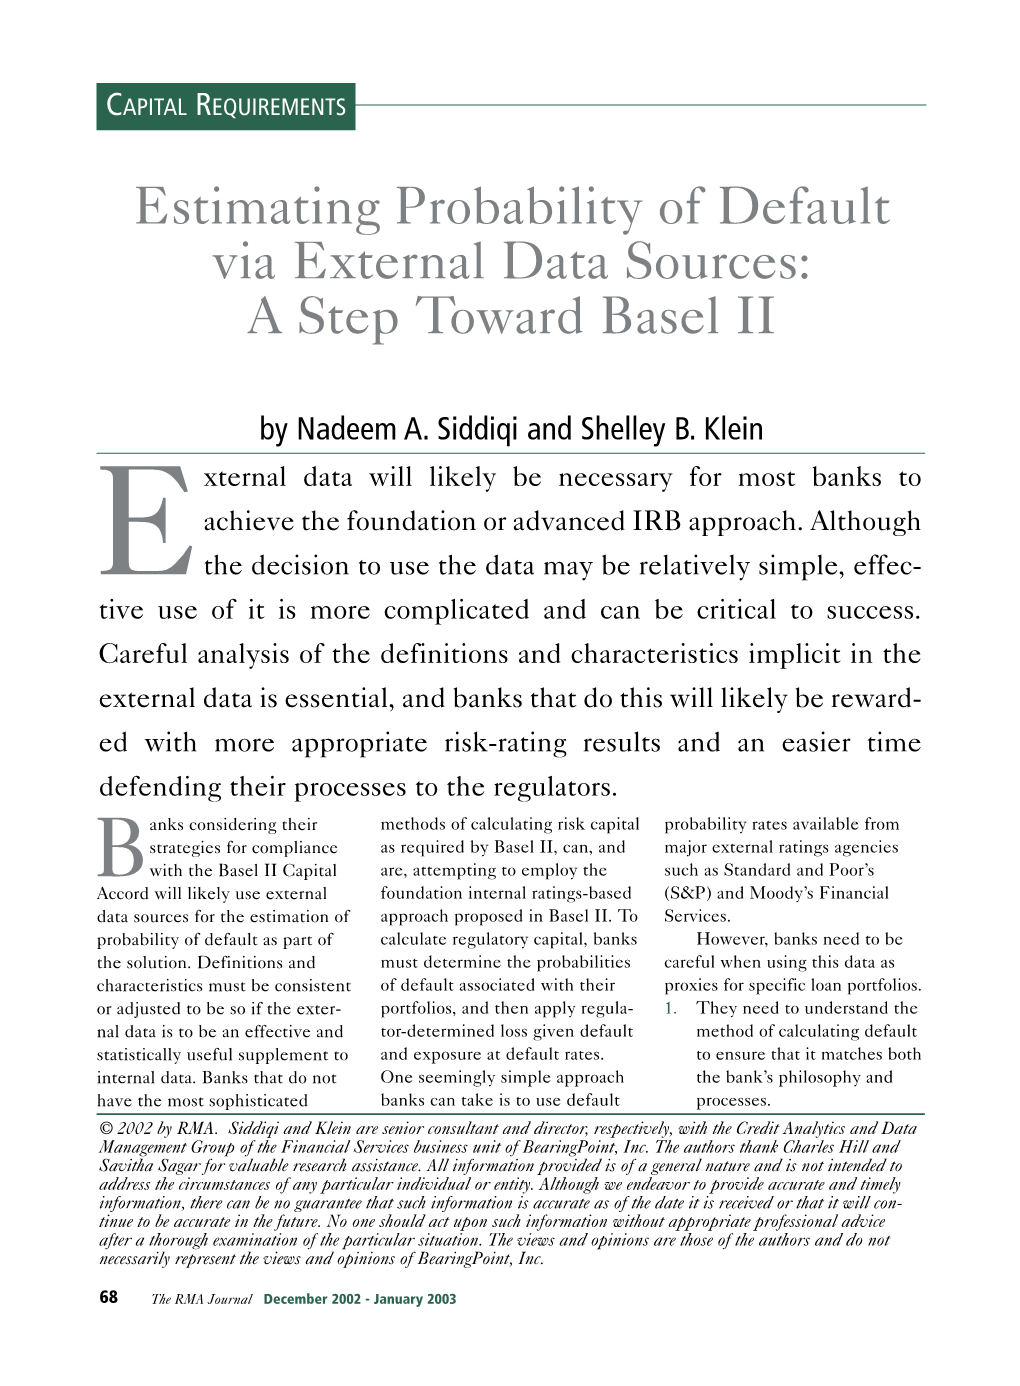 Estimating Probability of Default Via External Data Sources: a Step Toward Basel II